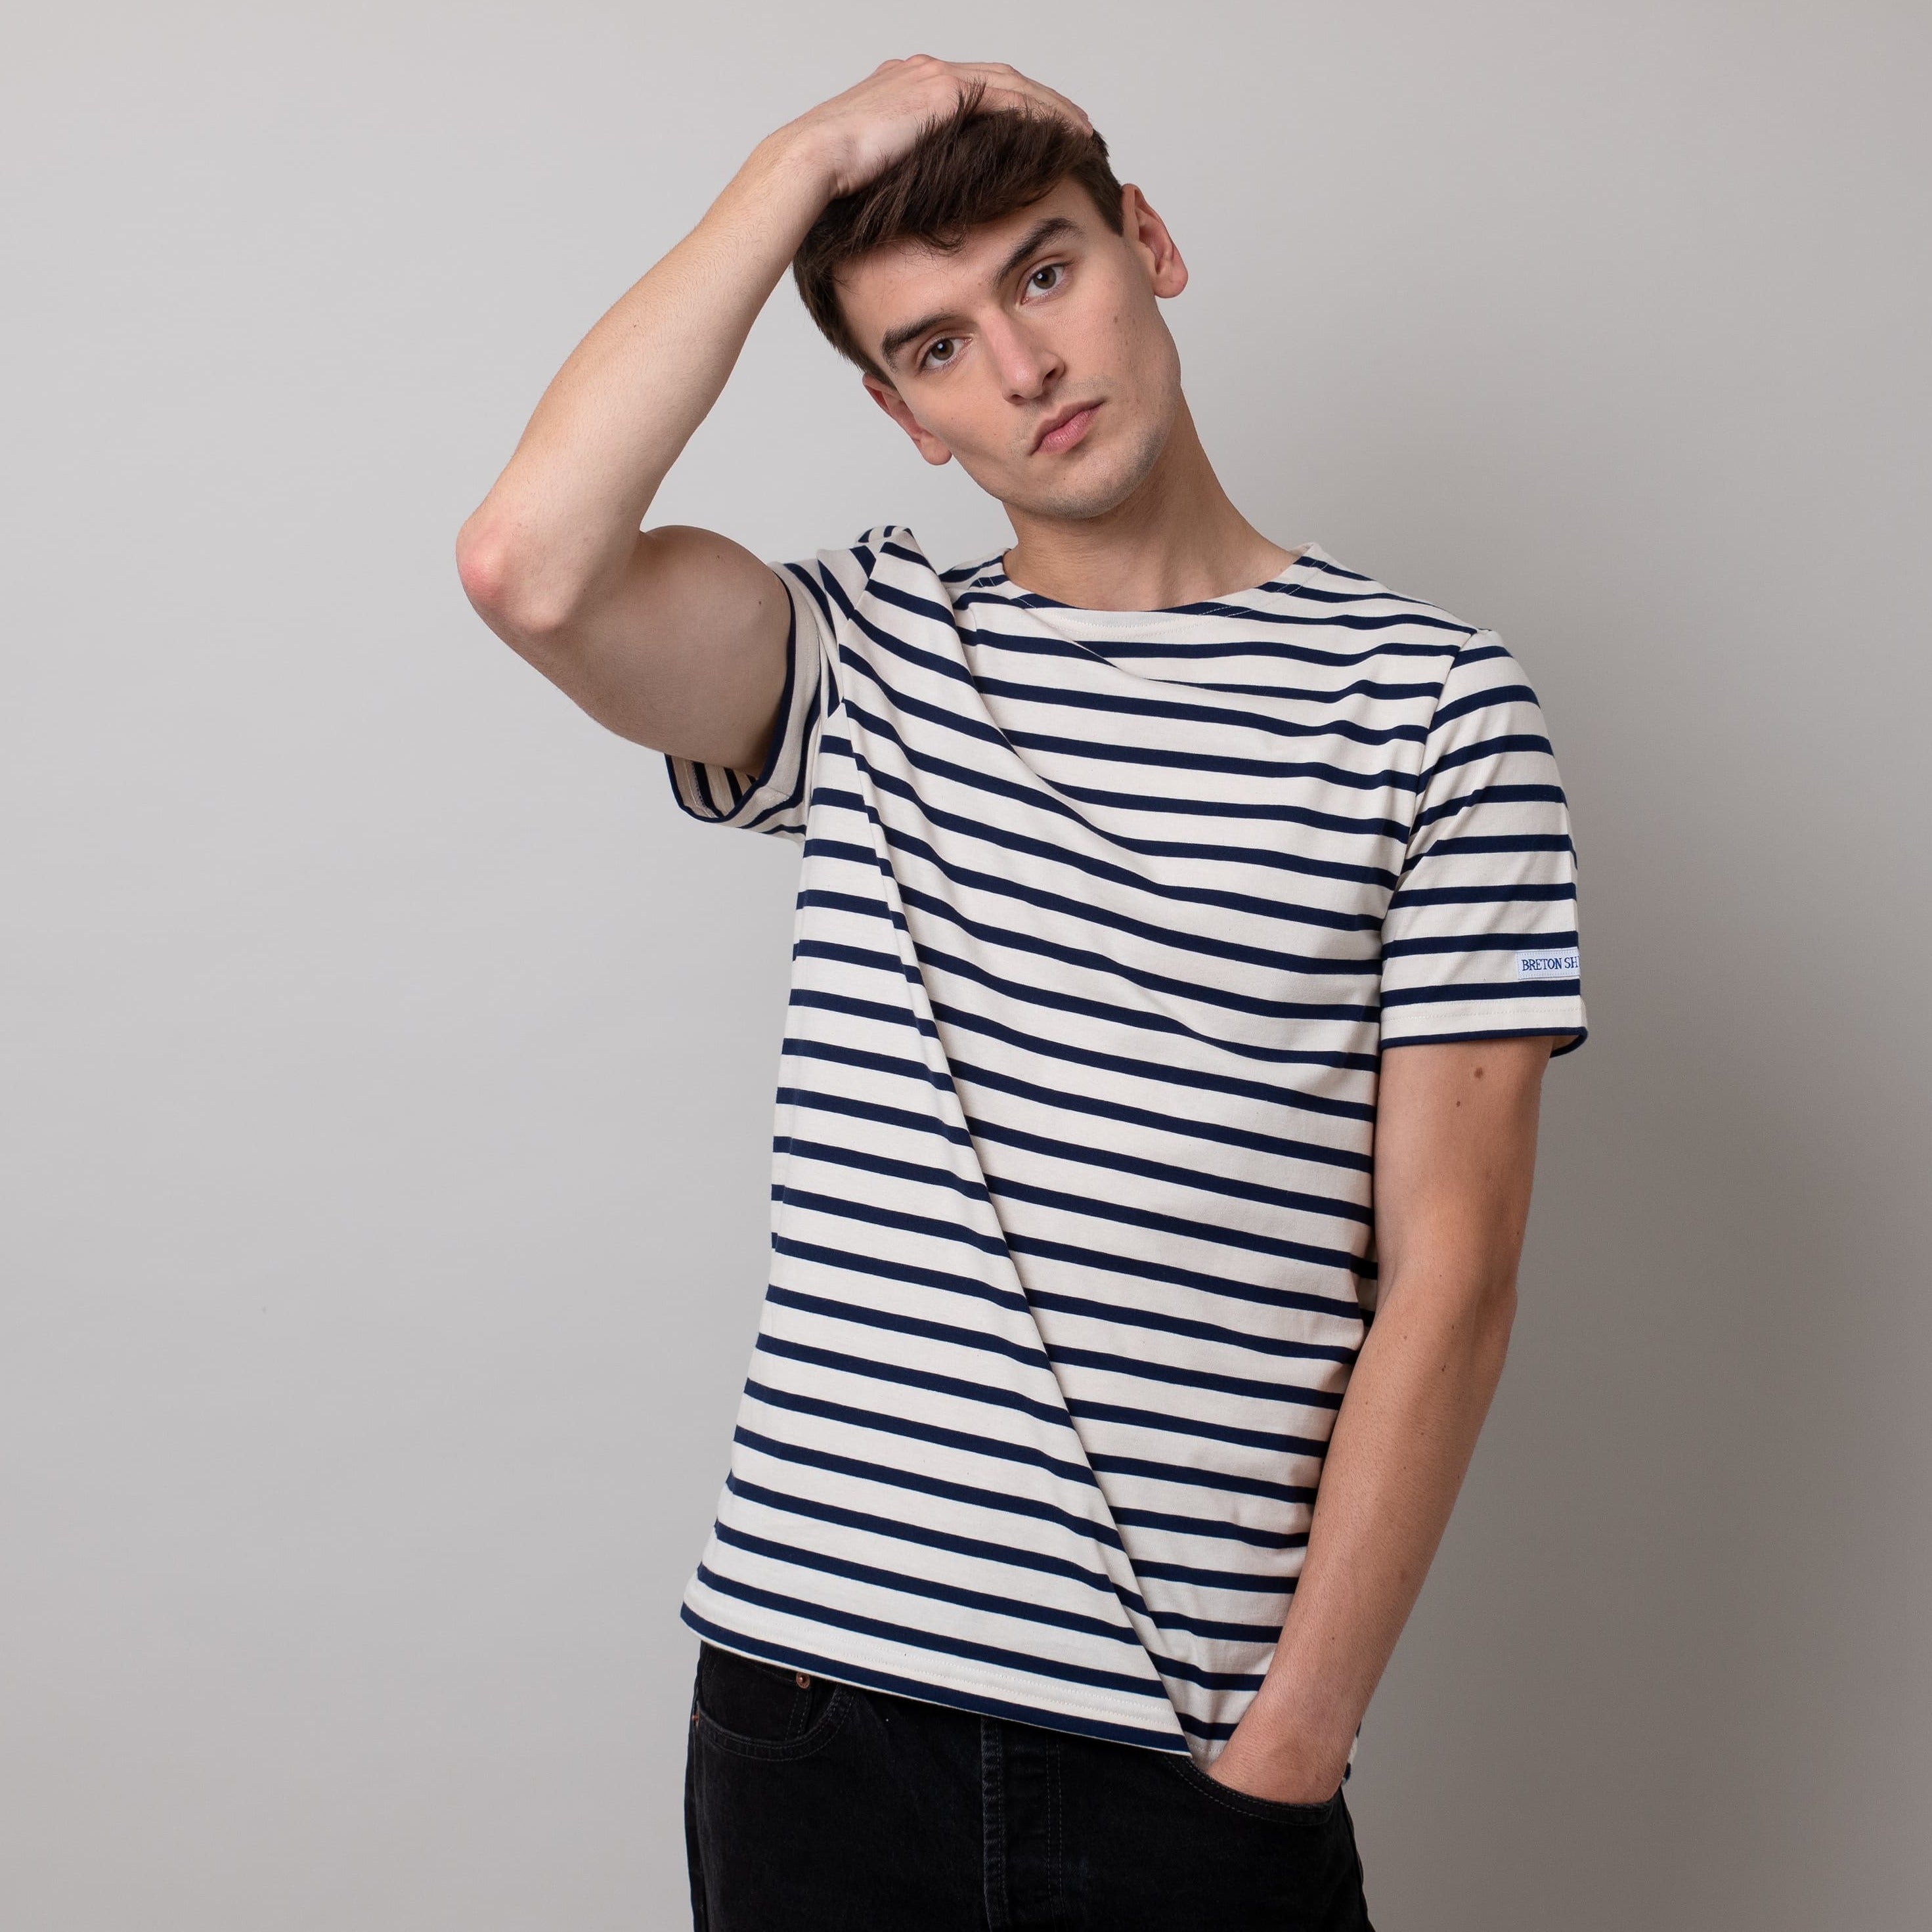 Striped Cotton Shirt - Pacific Blue/White Stripe